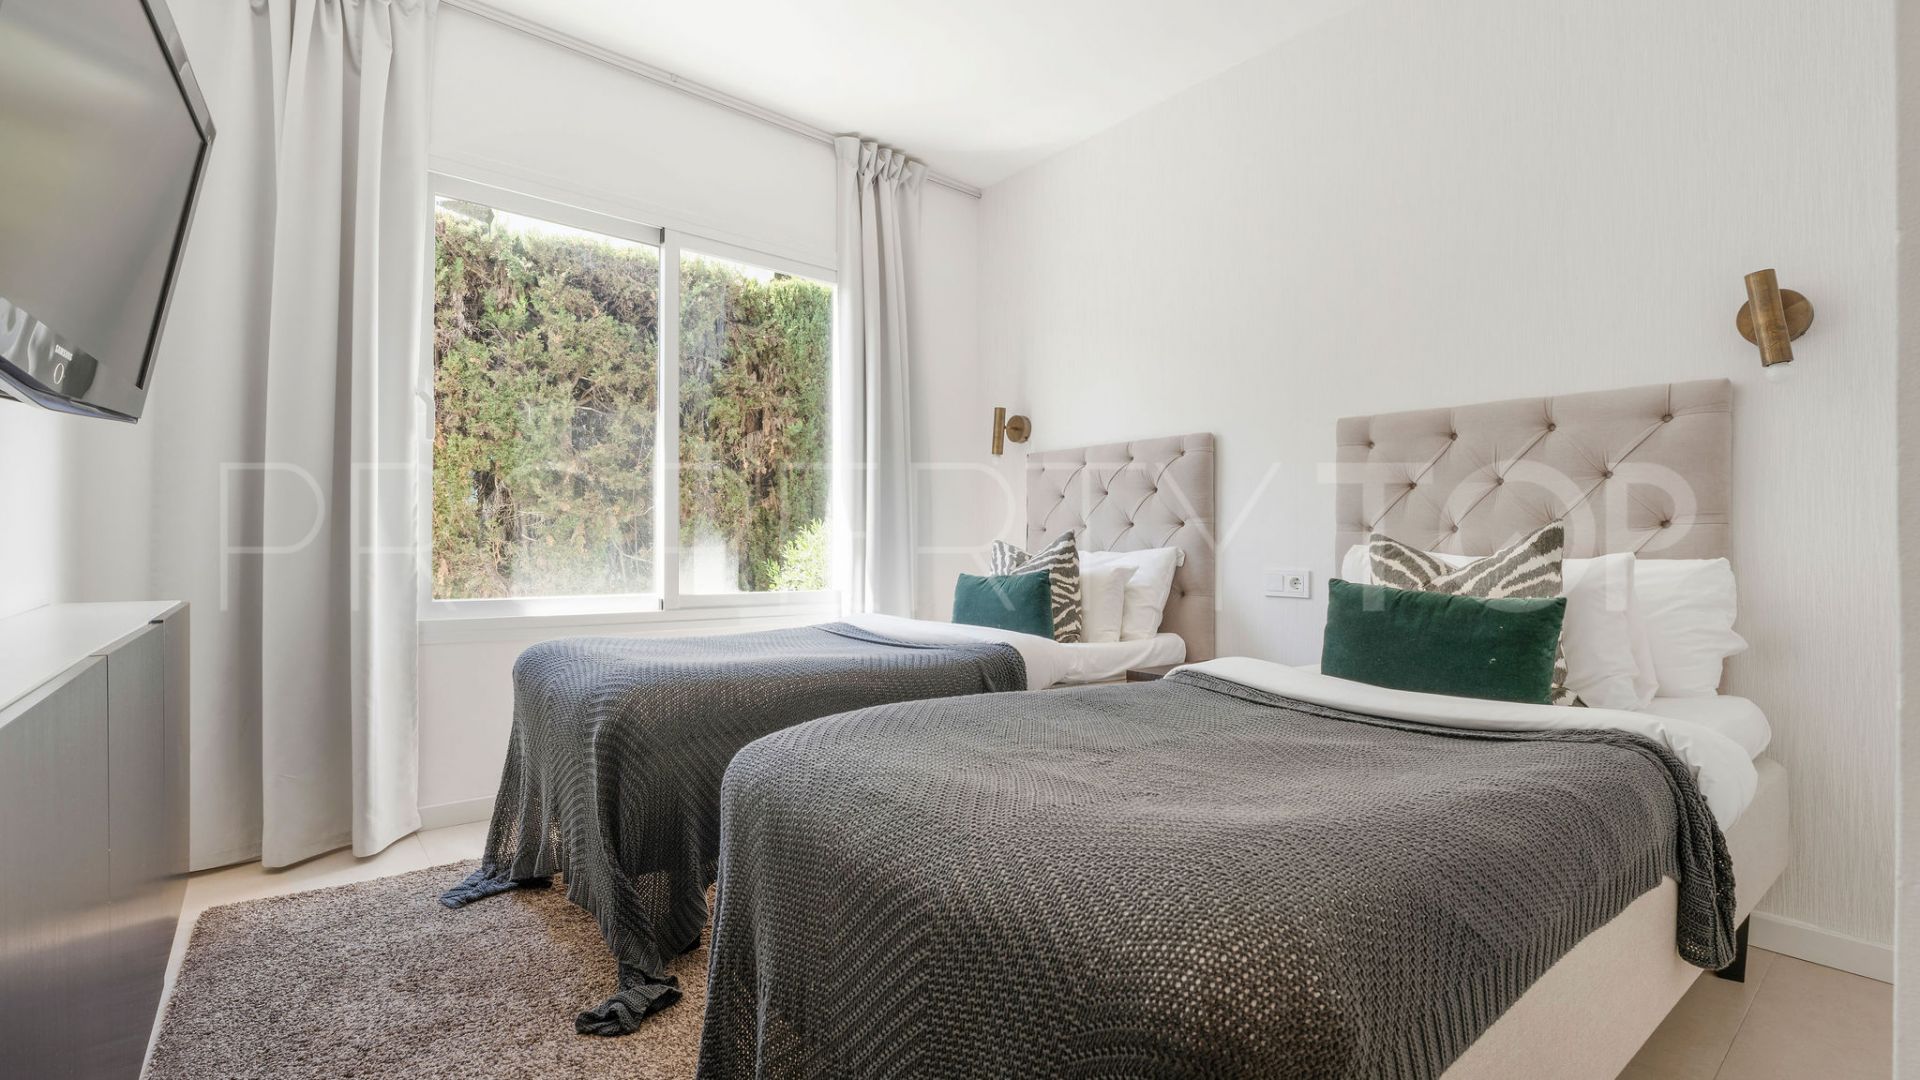 4 bedrooms villa in Nueva Andalucia for sale